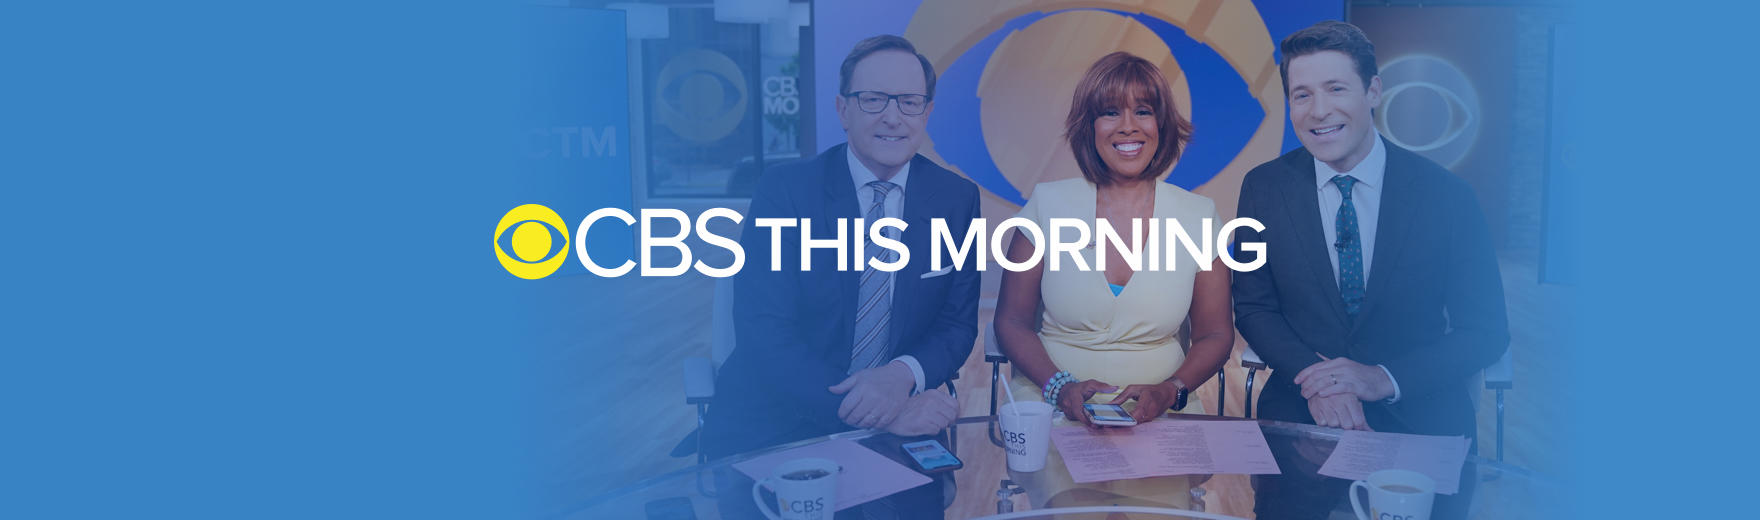 CBS News: CBS This Morning 